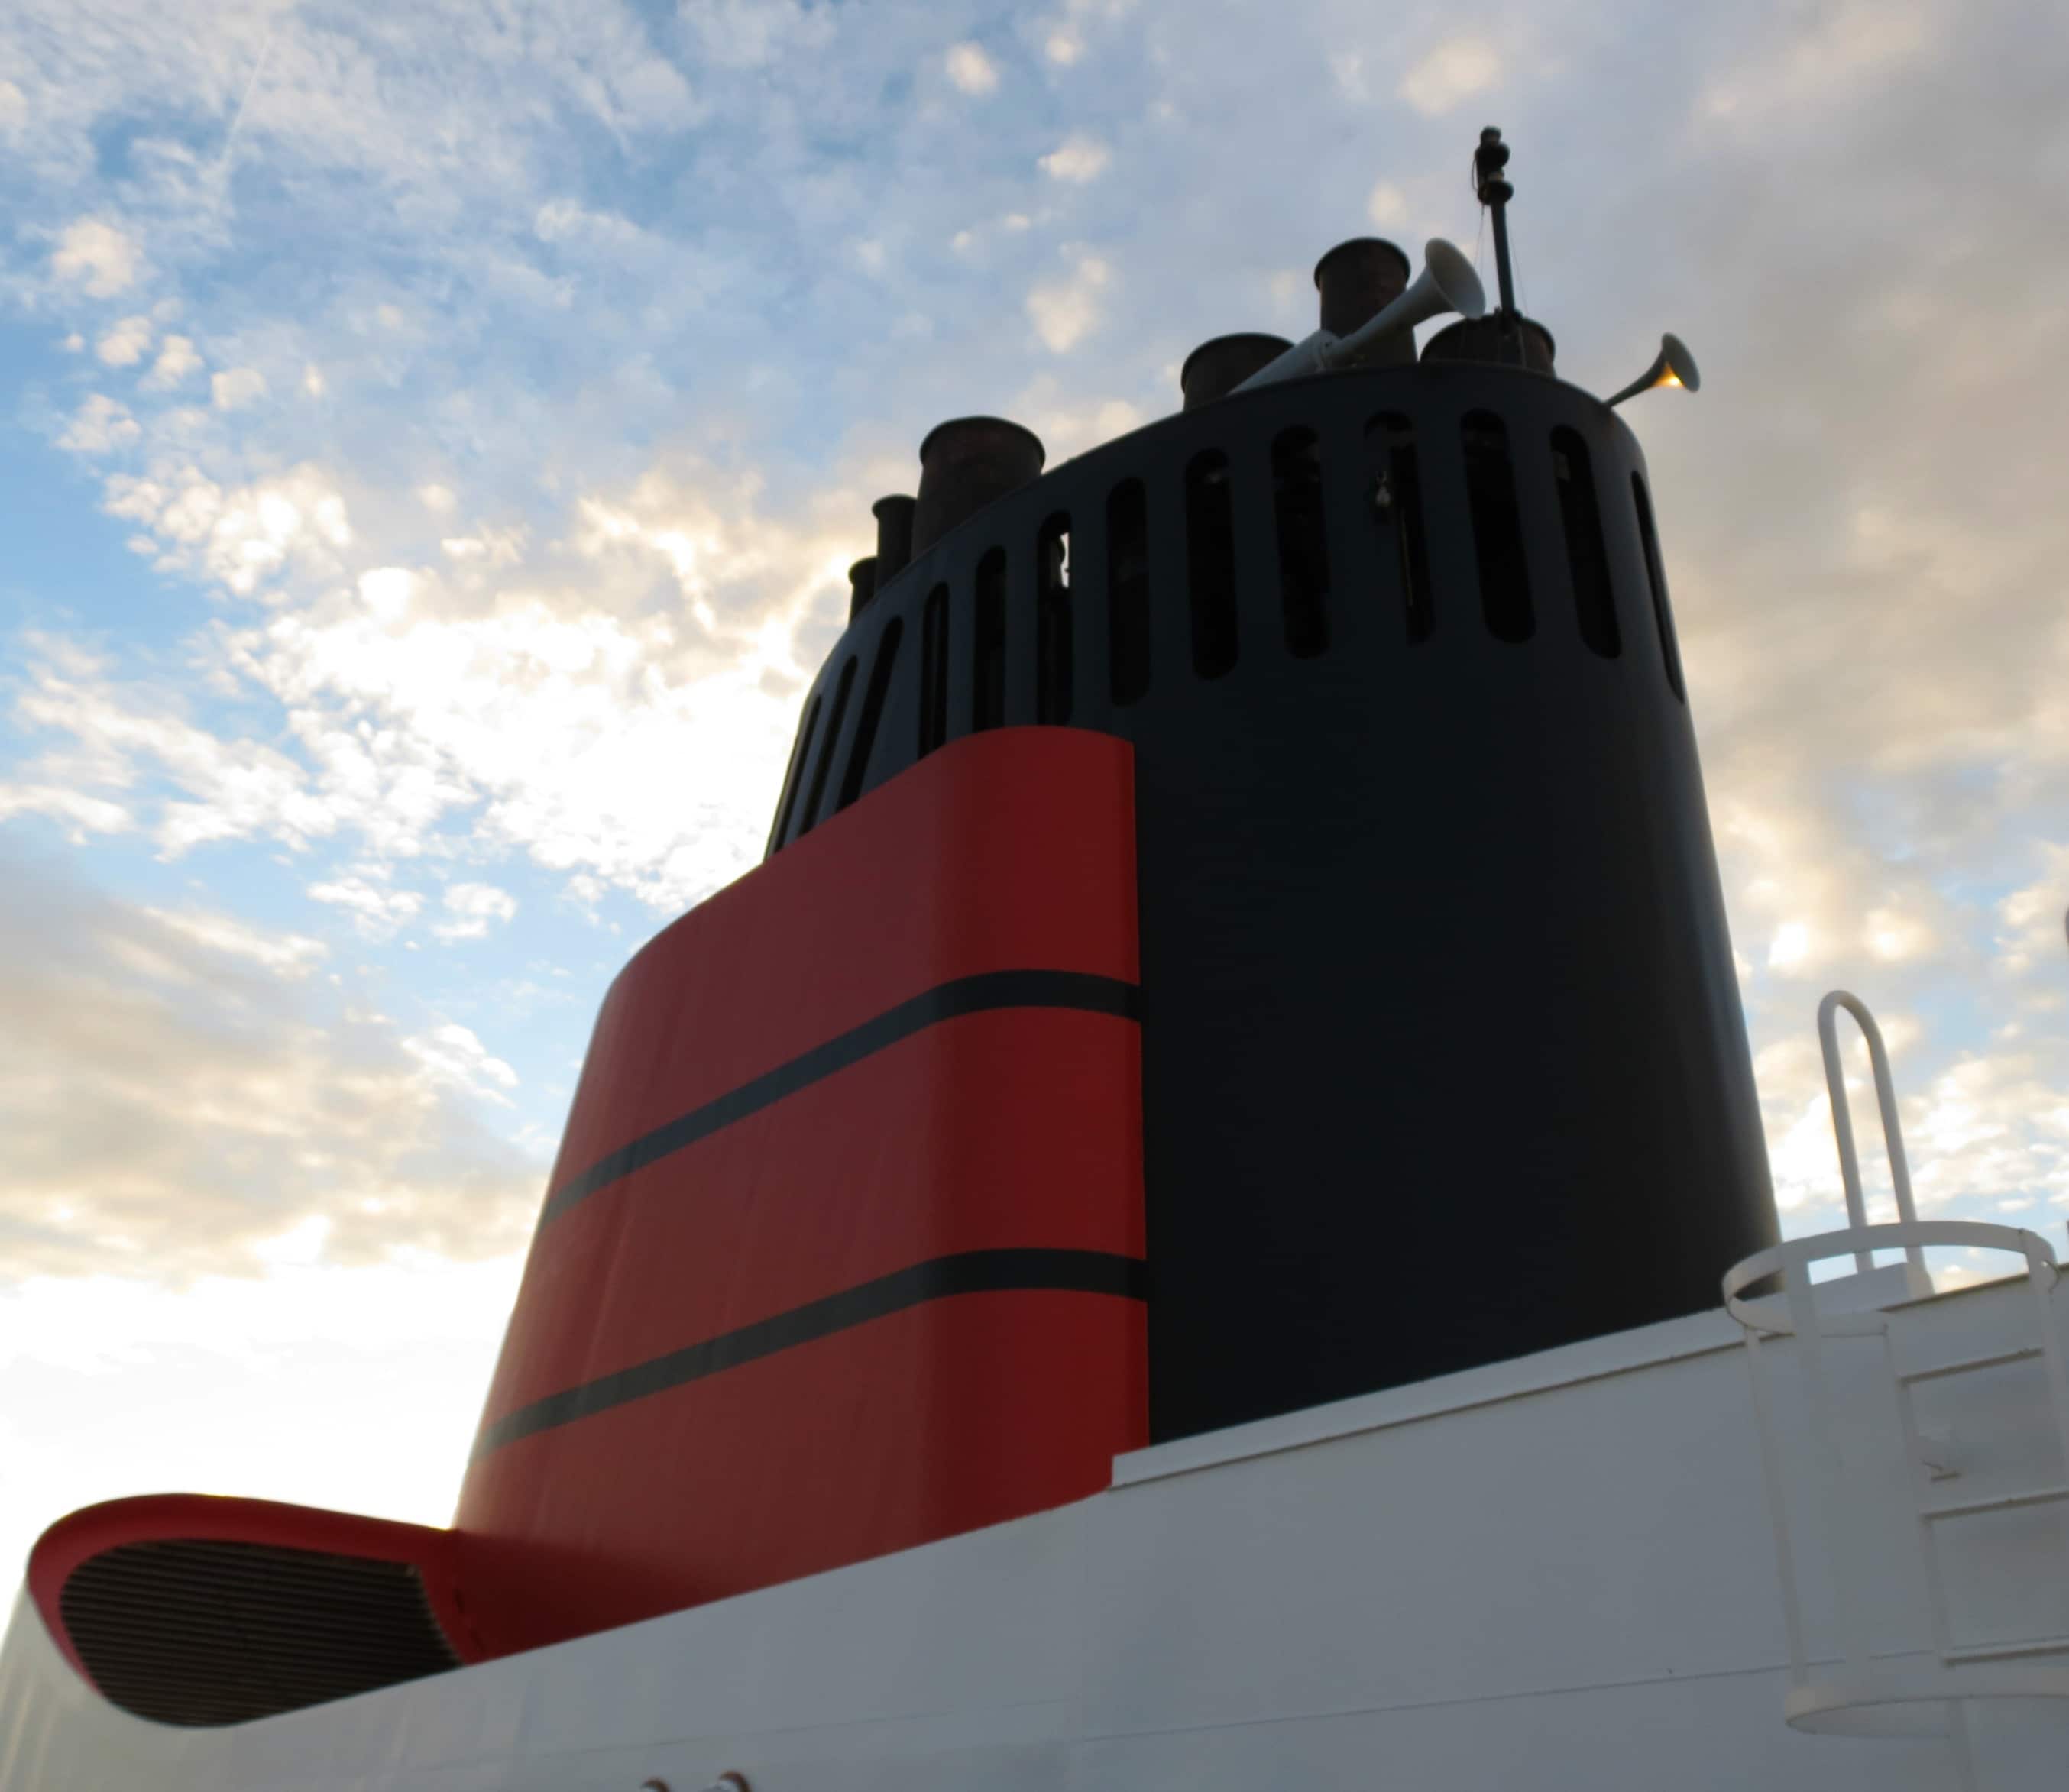 Baby Boomer Travel | Cruising | Cunard Queen Elizabeth smokestack